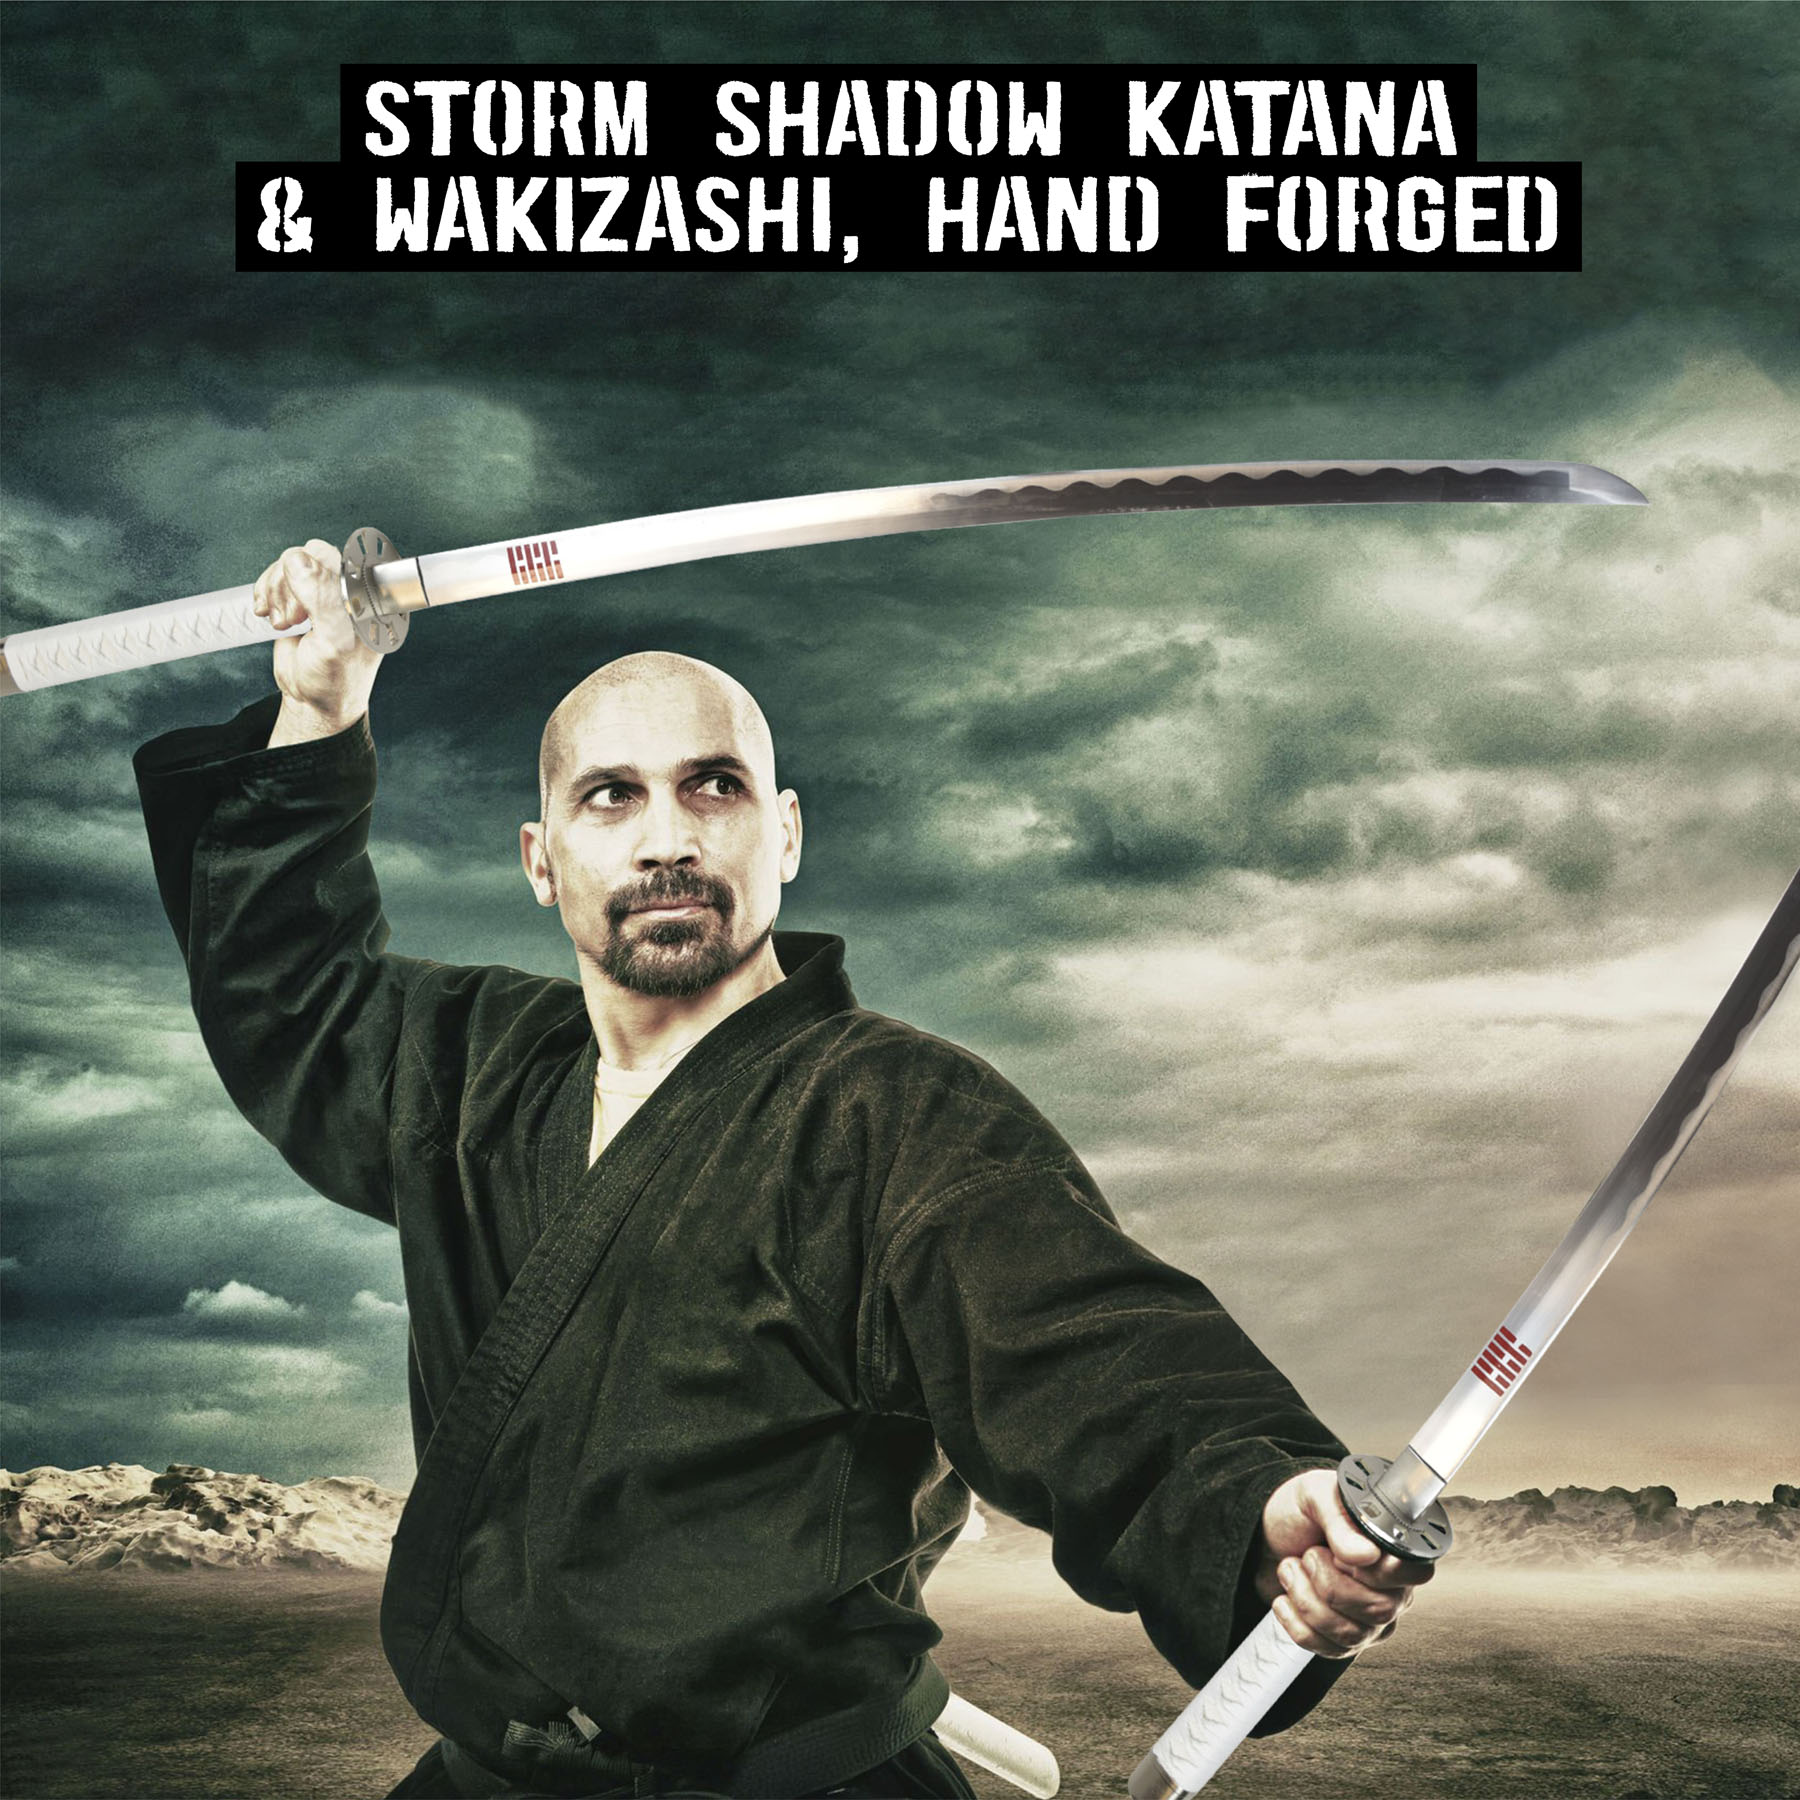 GI Joe - Storm Shadow Katana & Wakizashi, handforged 